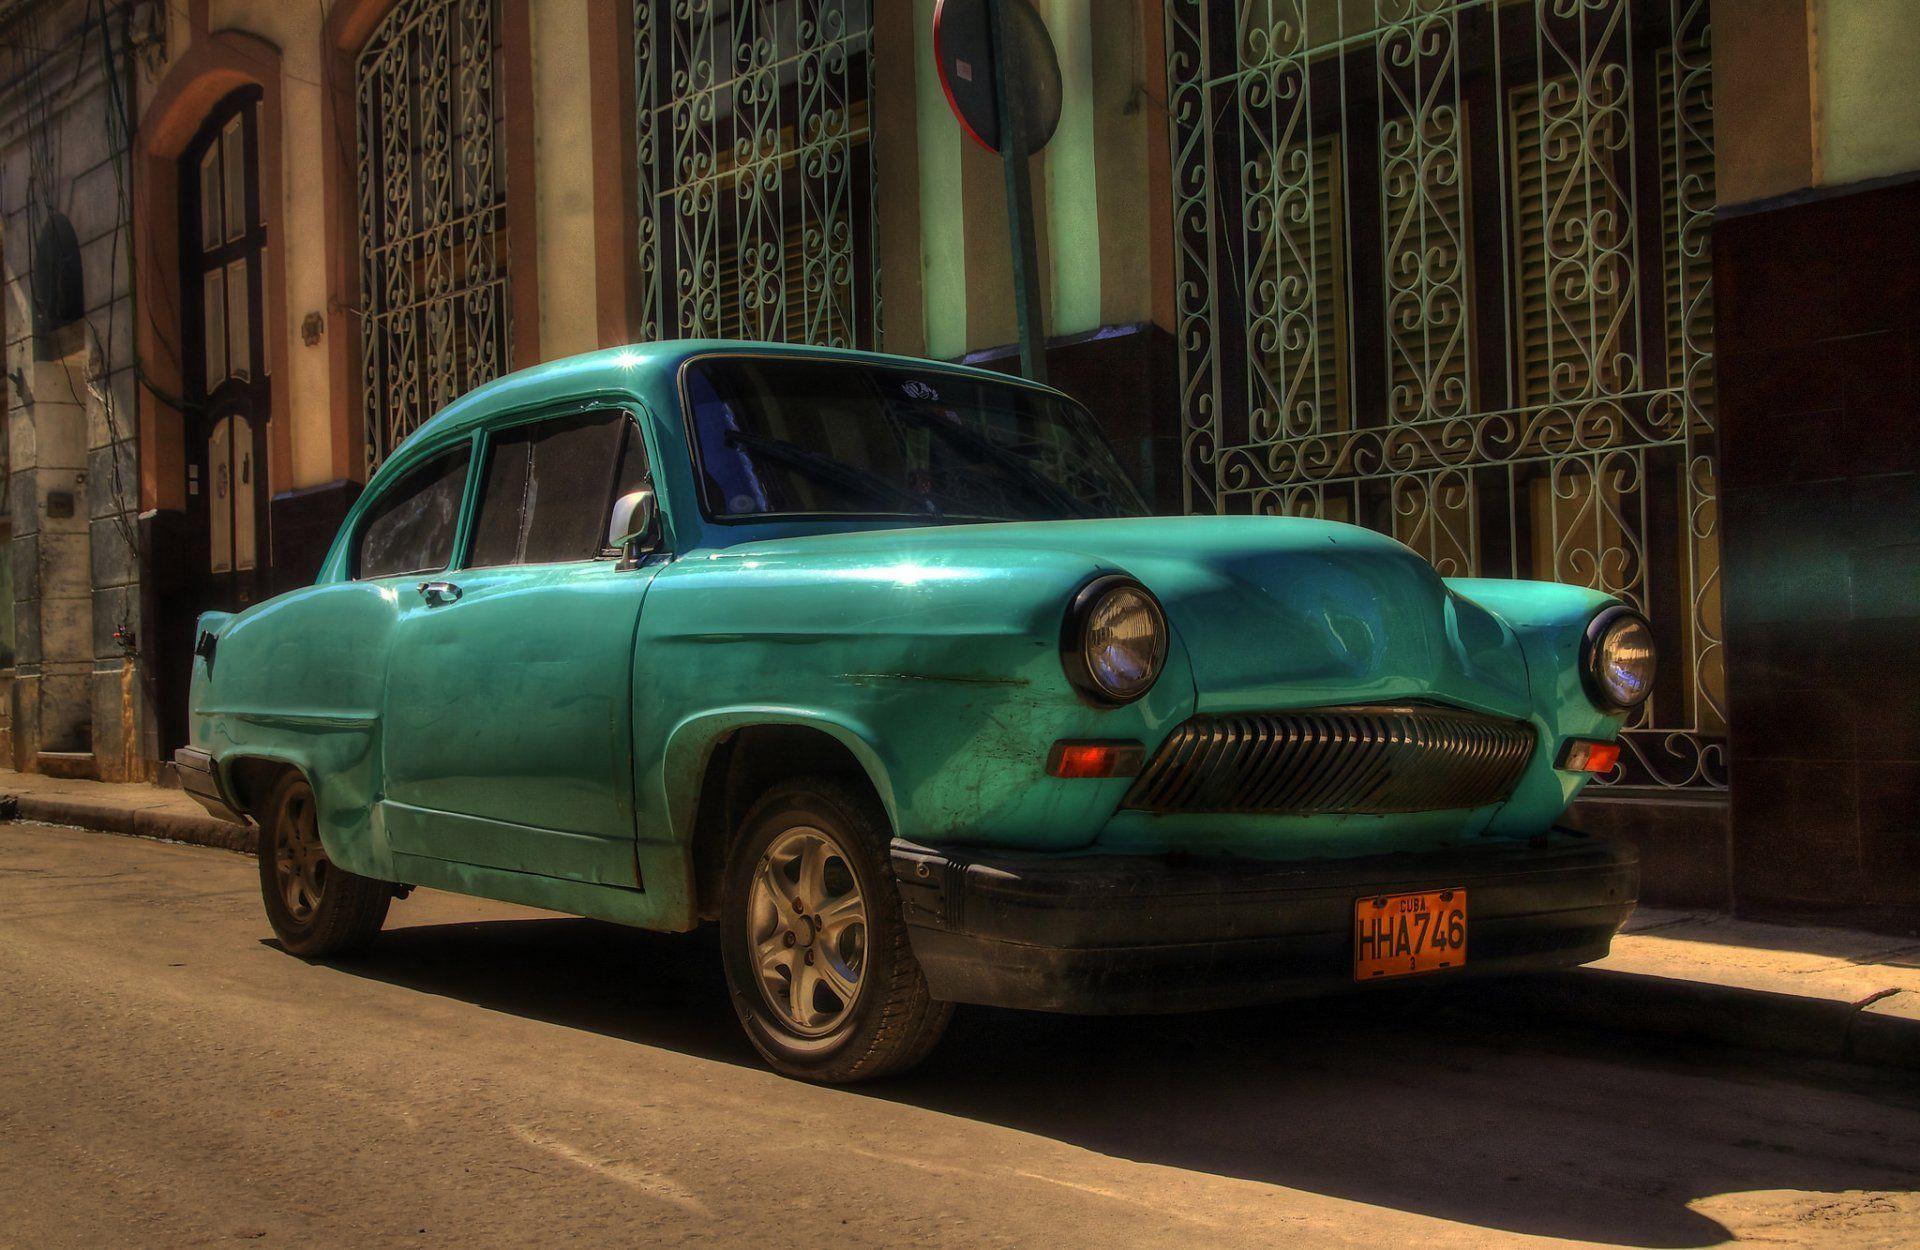 Vehicles retro street cuba havana 2K wallpapers